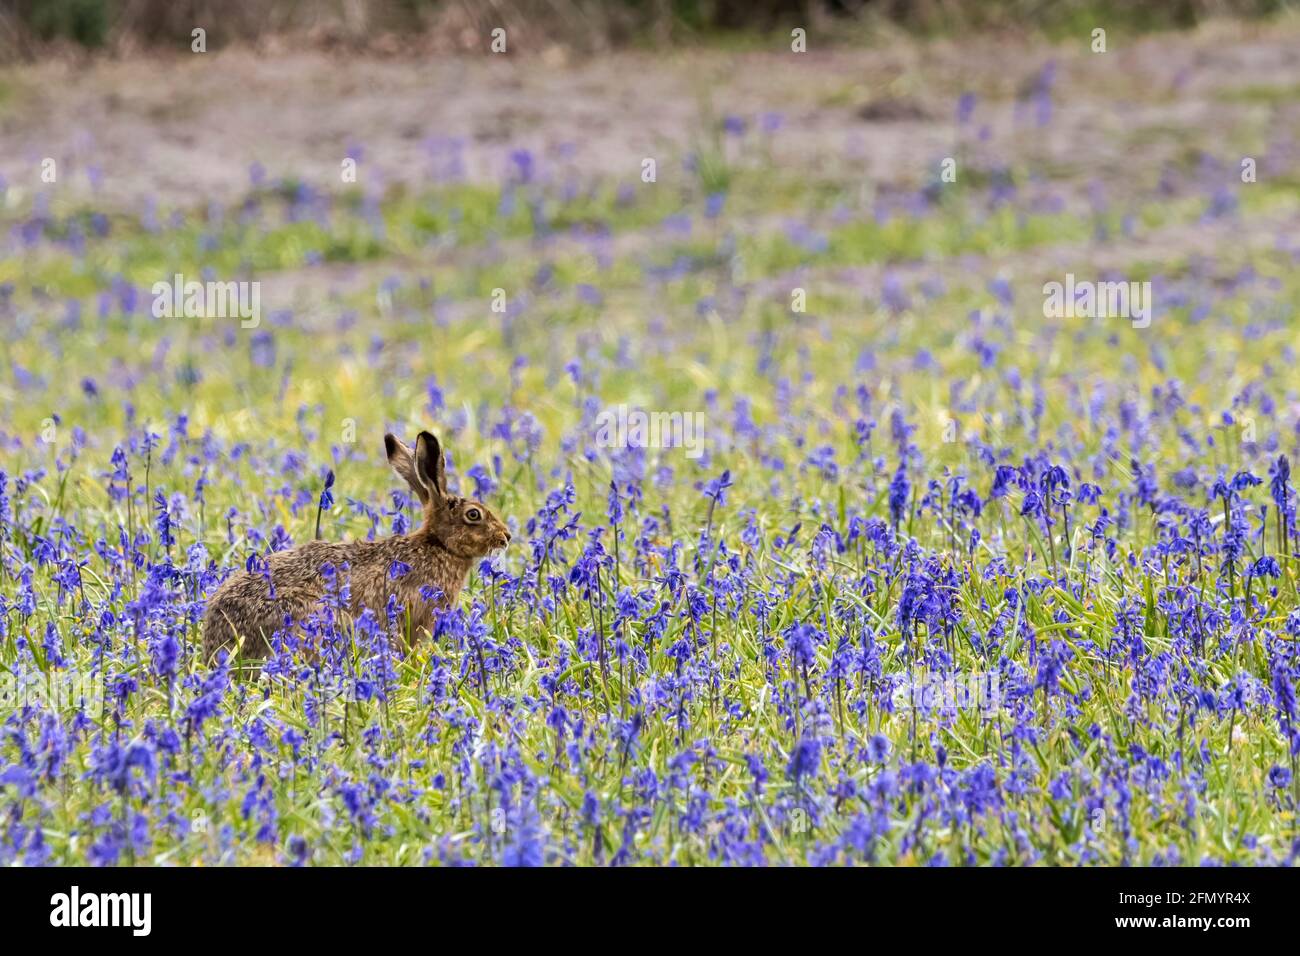 A European hare, Lepus europaeus, sitting in a field of English bluebells, Hyacinthoides non-scripta. Stock Photo